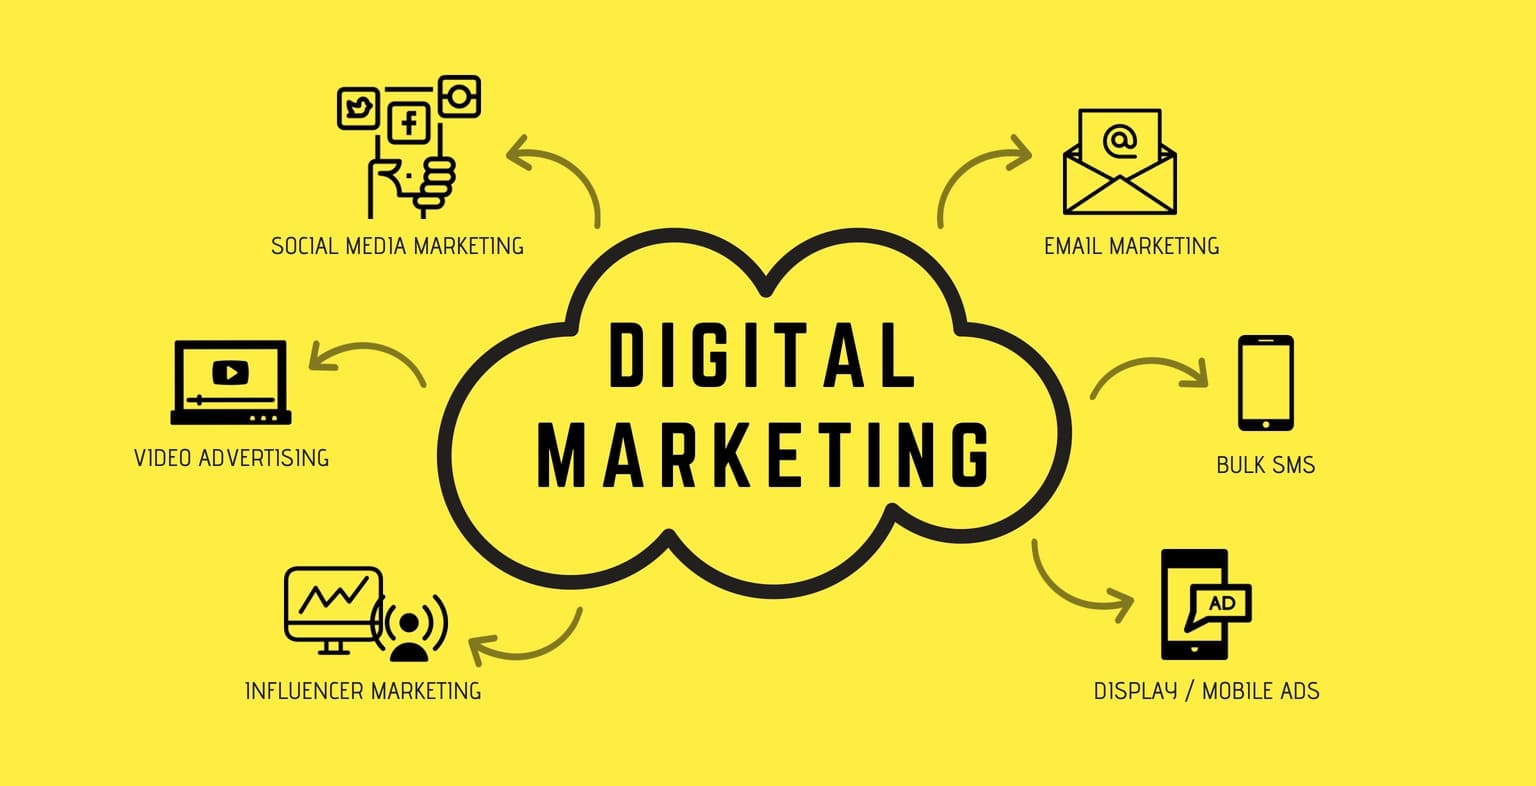 Digital Marketing là gì?​